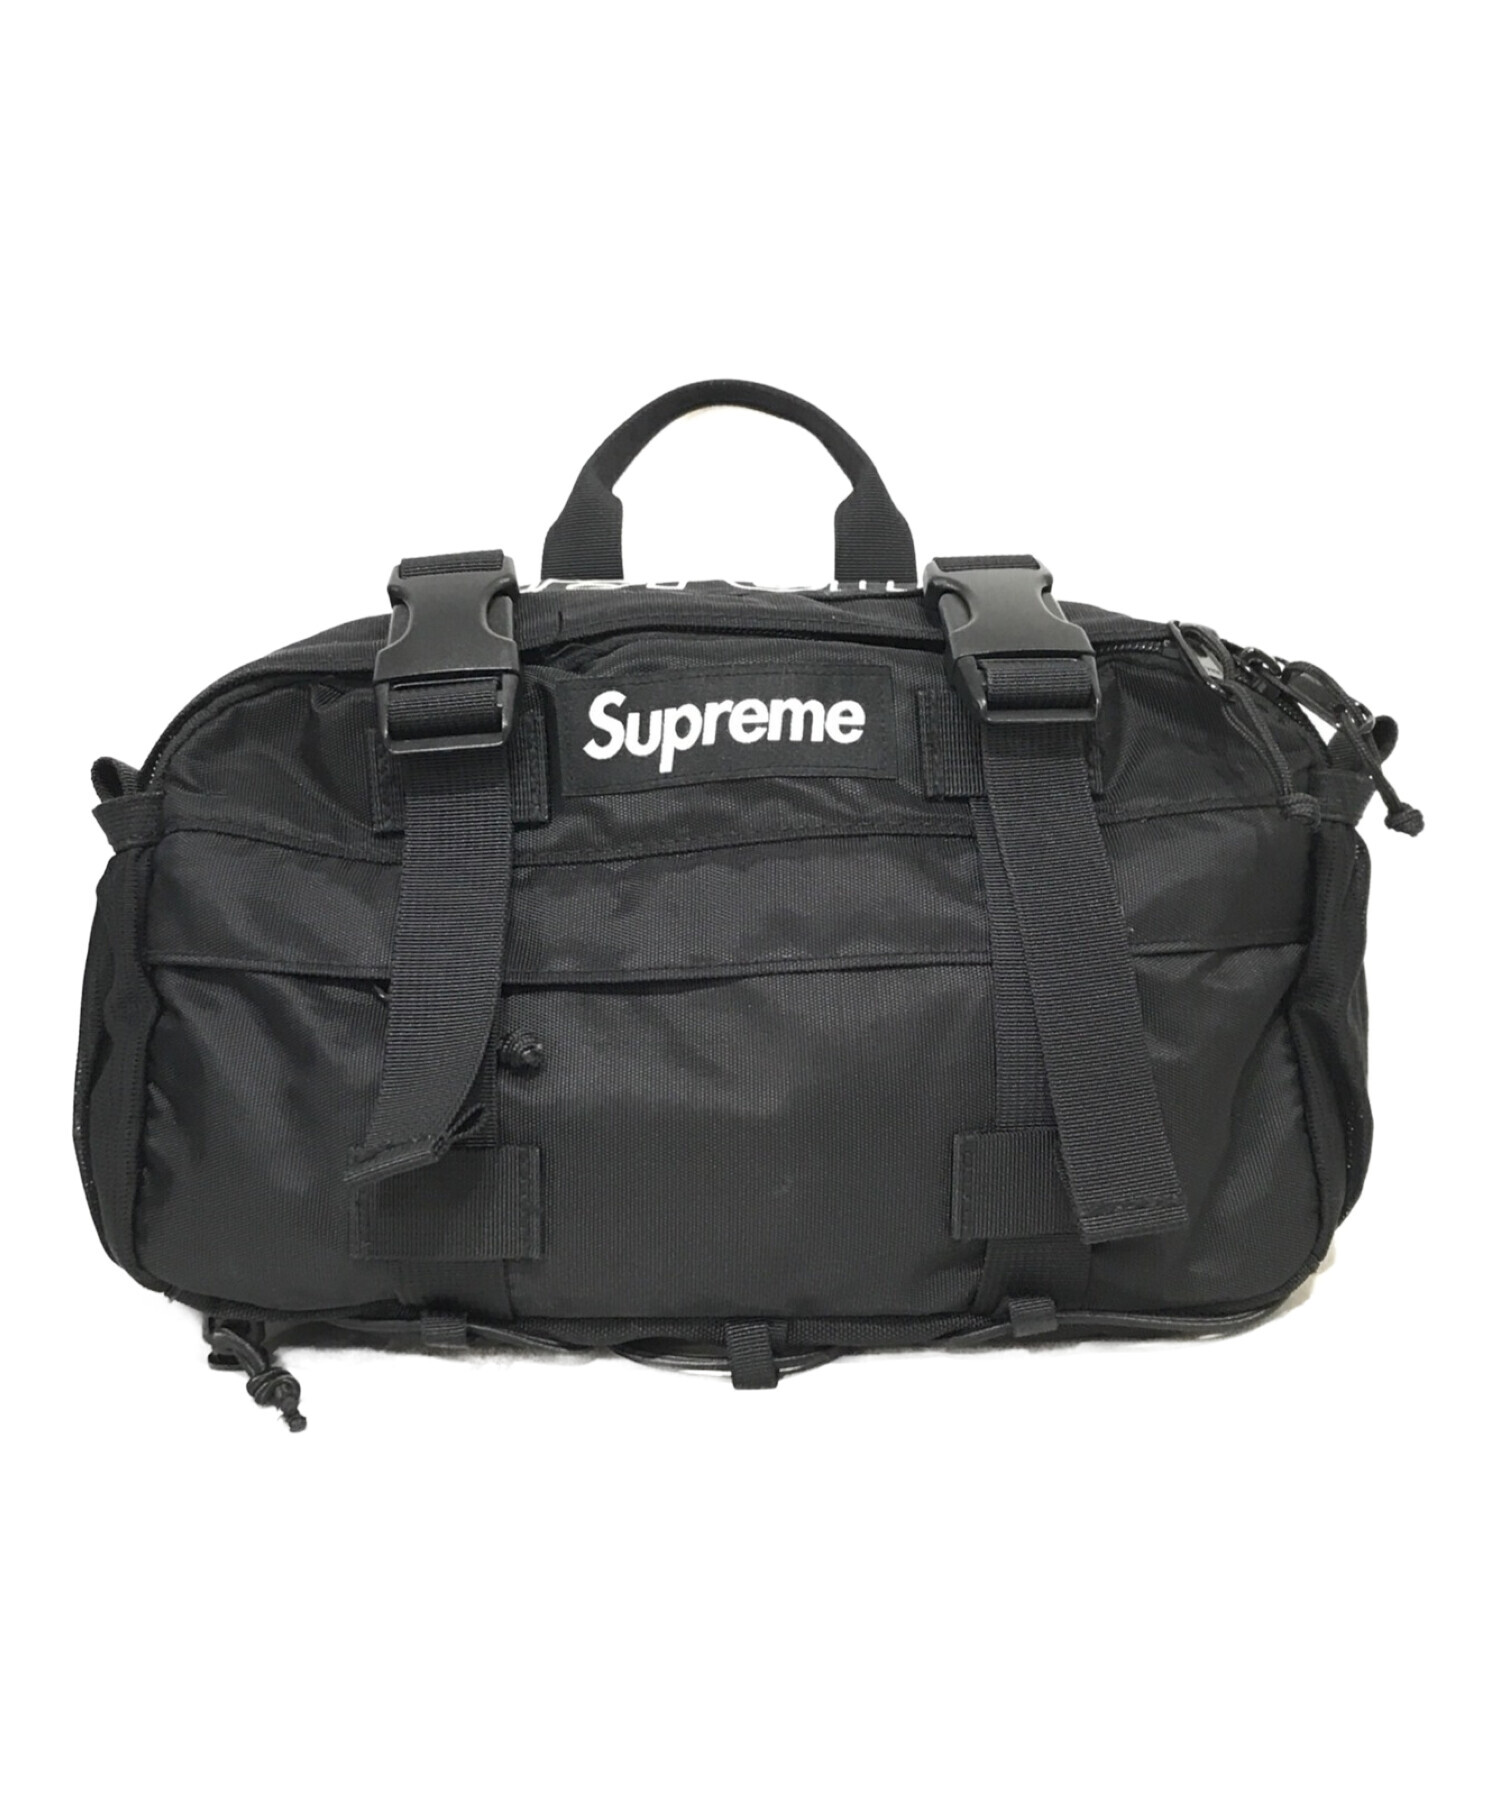 Supreme waist bag black 19aw ブラック